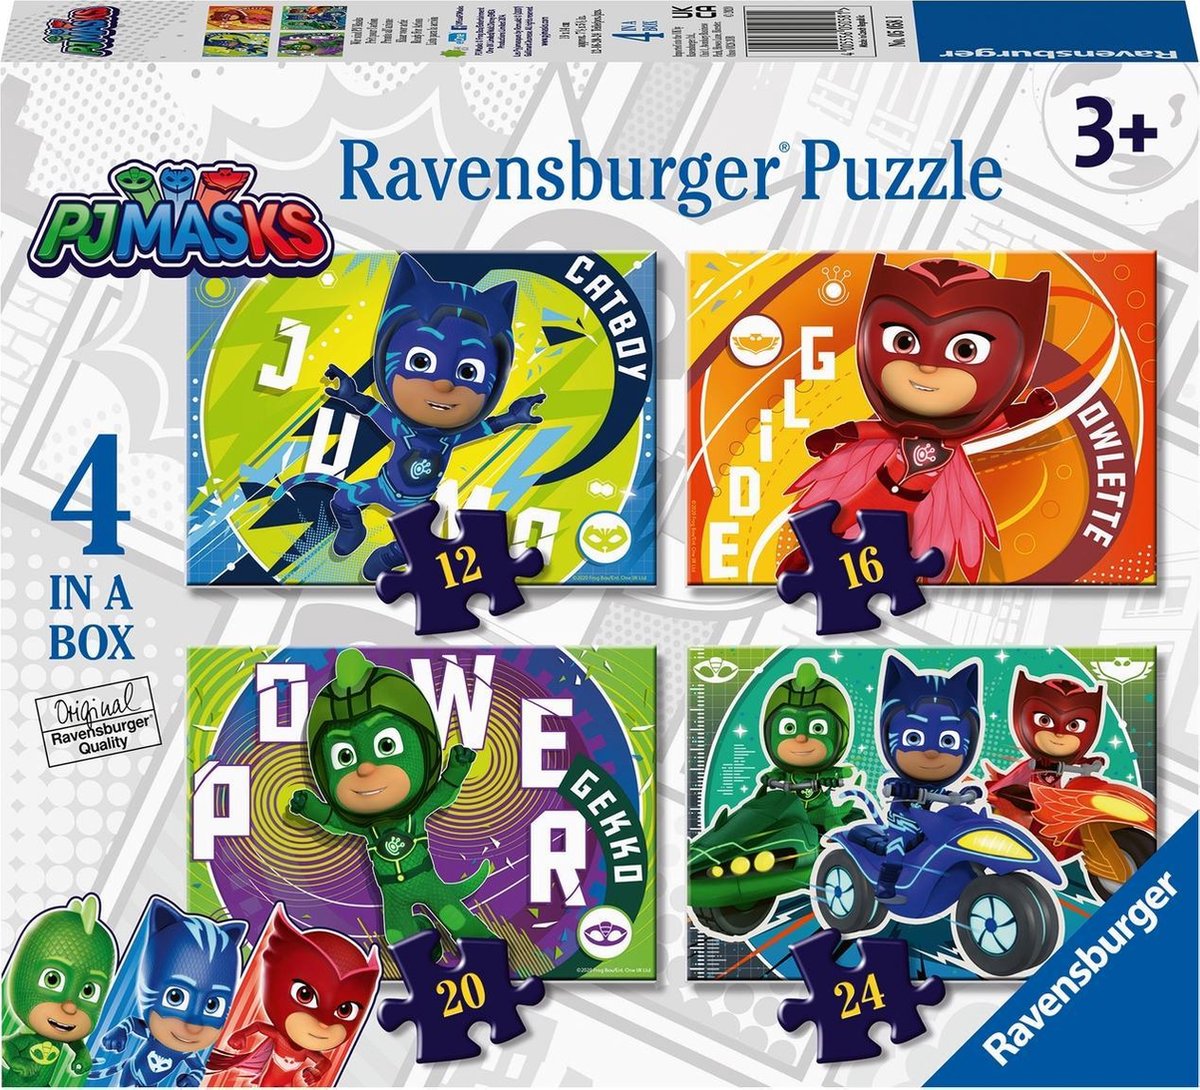   PJ Masks 4in1box puzzel - 12+16+20+24 stukjes - kinderpuzzel